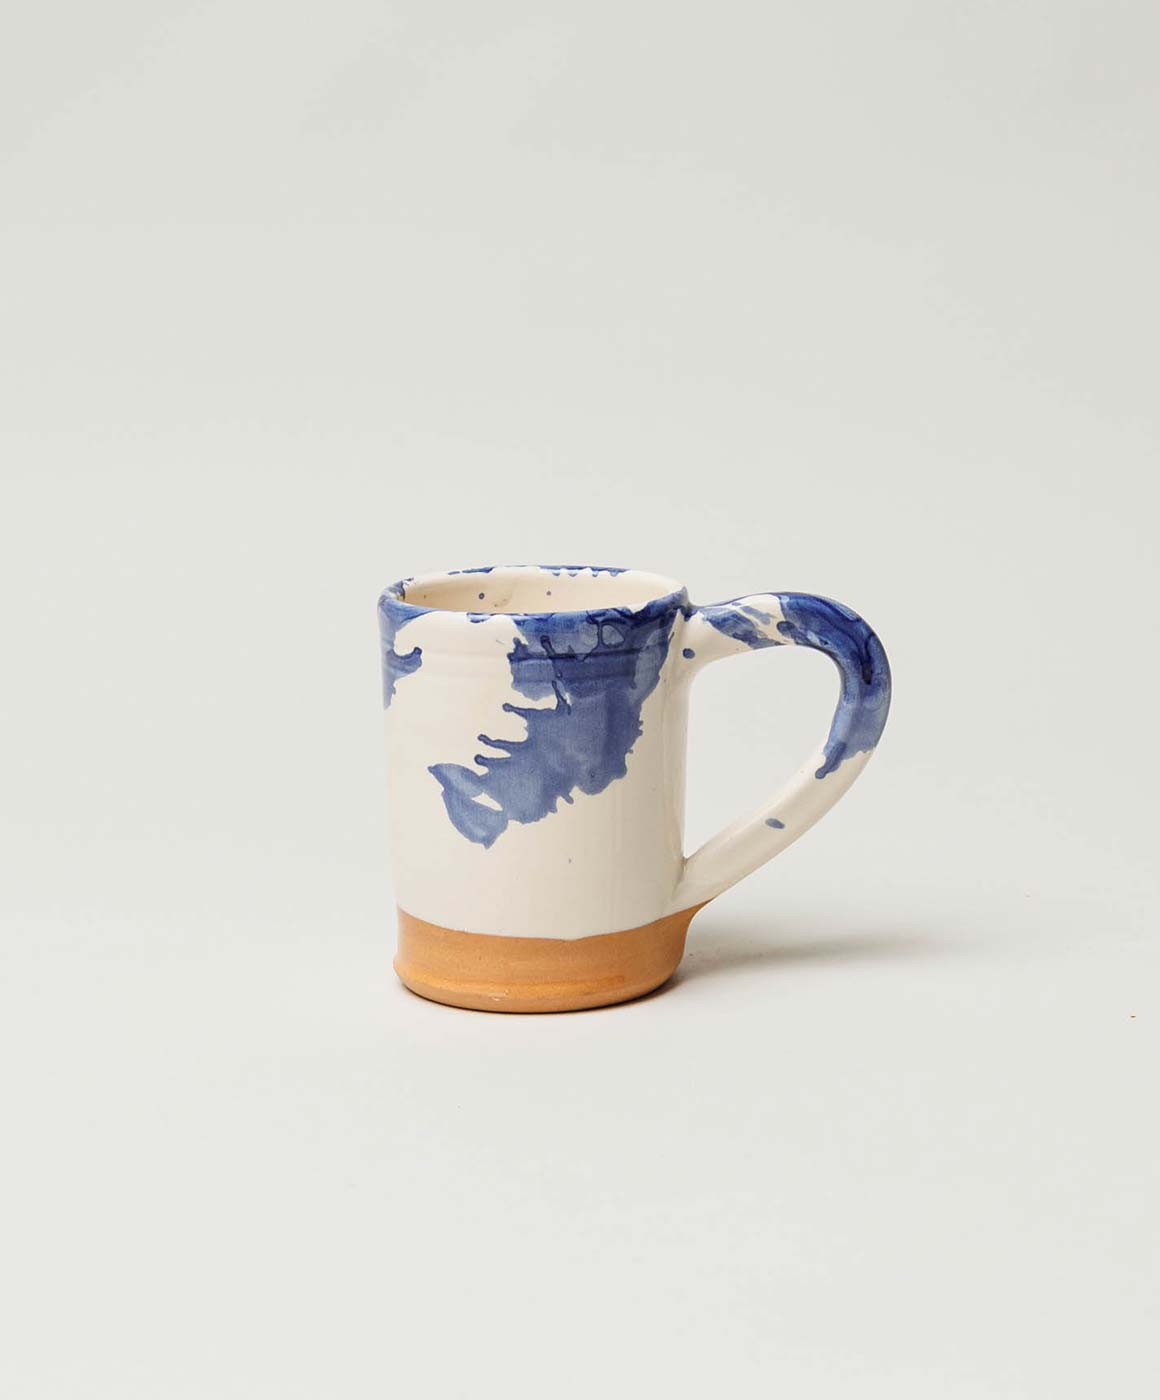   Blue Splatterware Mug  